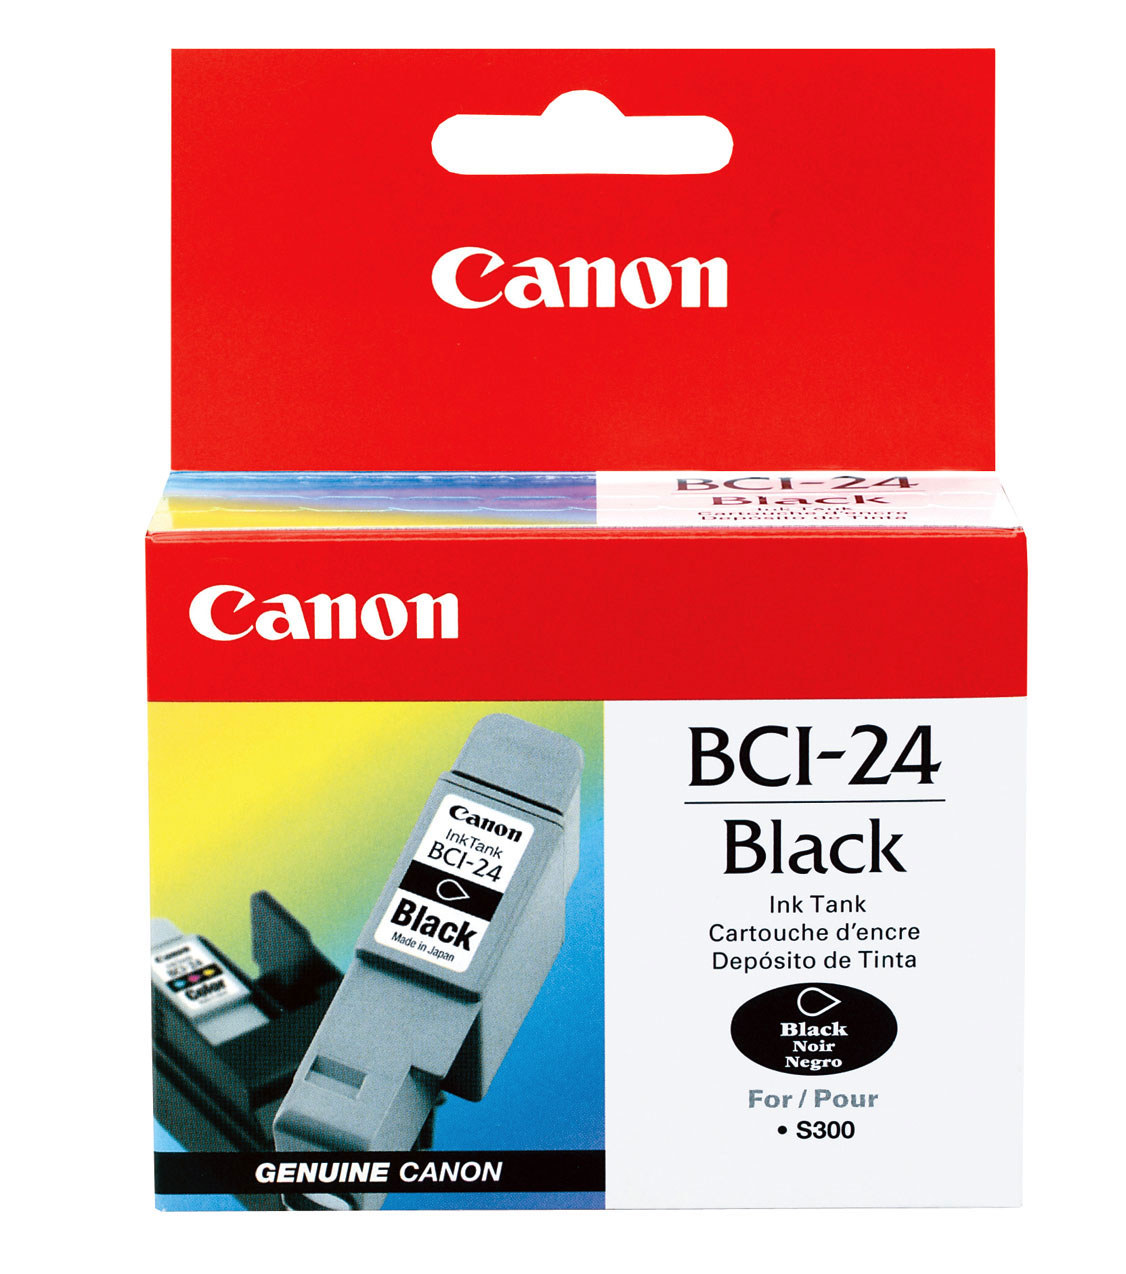 Canon BCI-24B printer cartridge